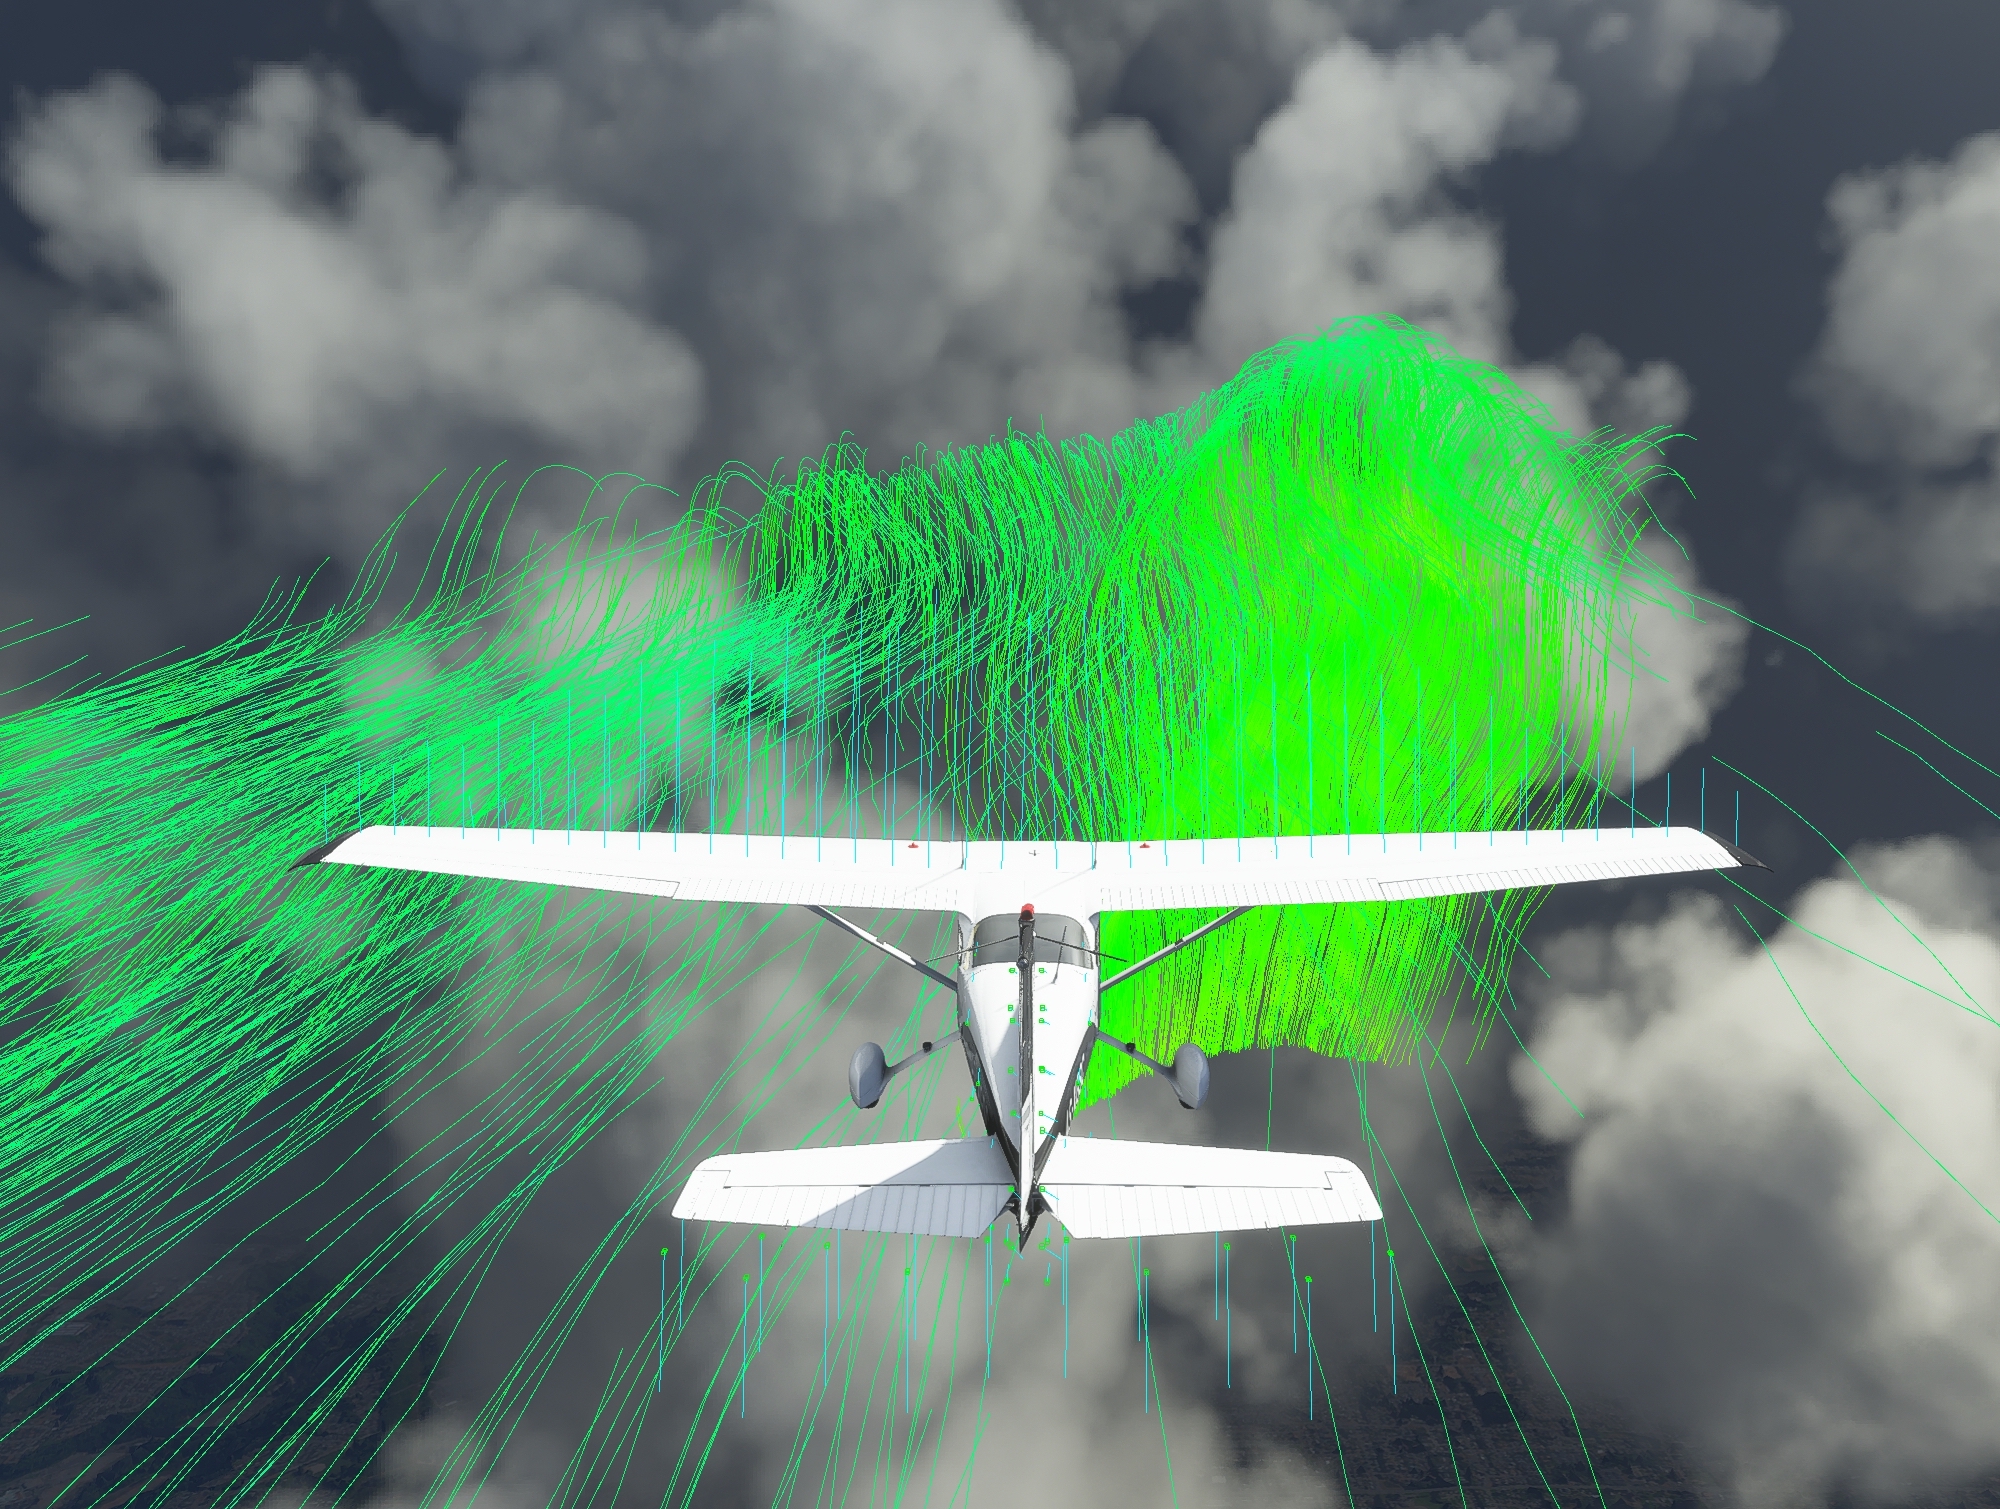 ✈️ - Microsoft Flight Simulator 2020